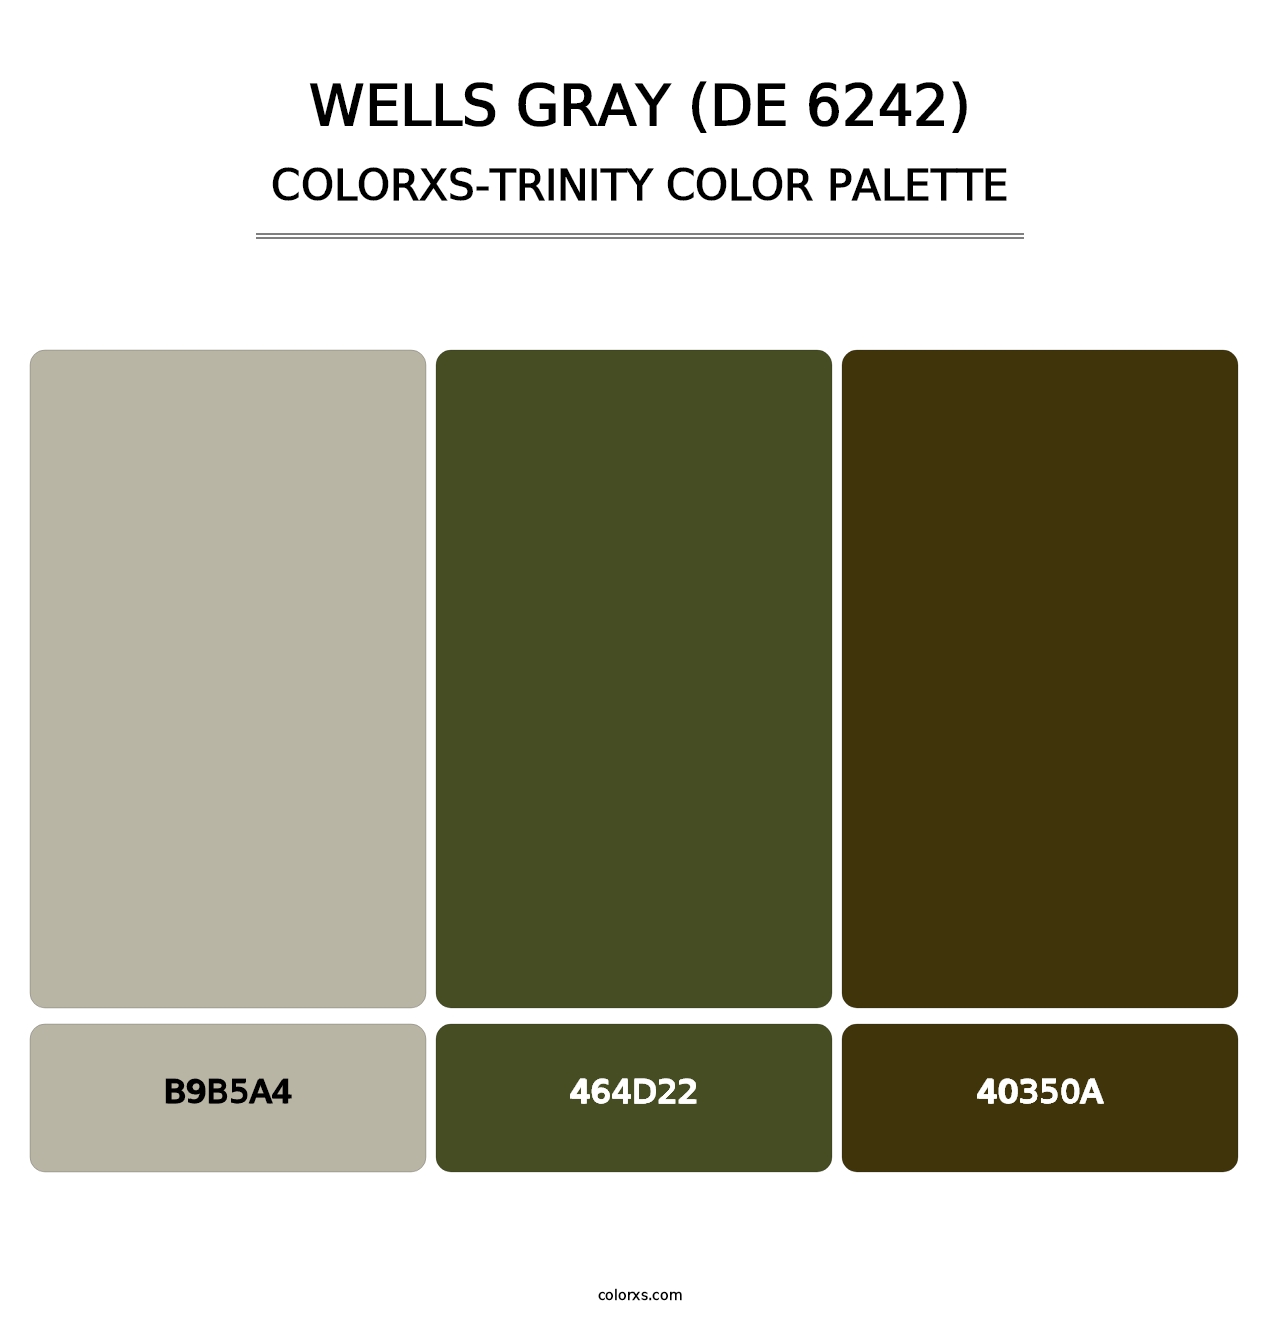 Wells Gray (DE 6242) - Colorxs Trinity Palette